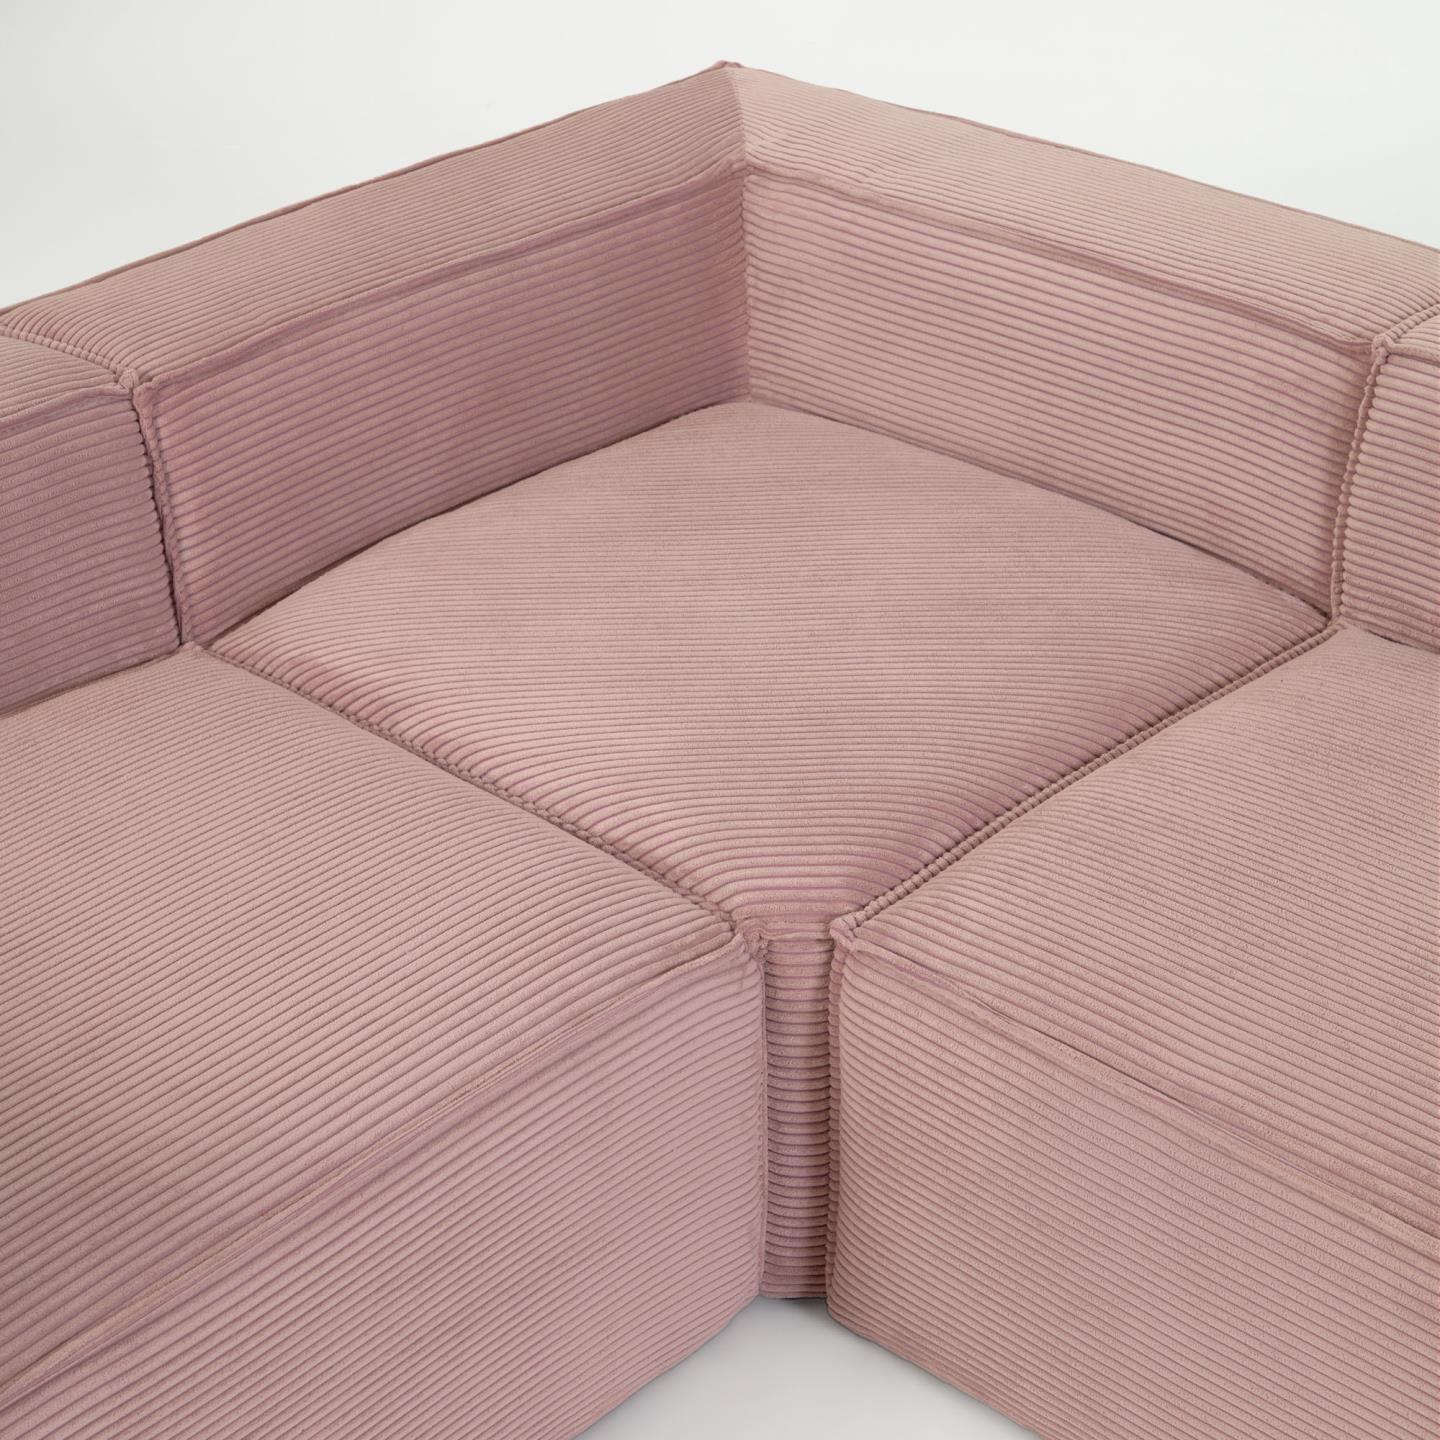 Velour Seater Corner Sofa